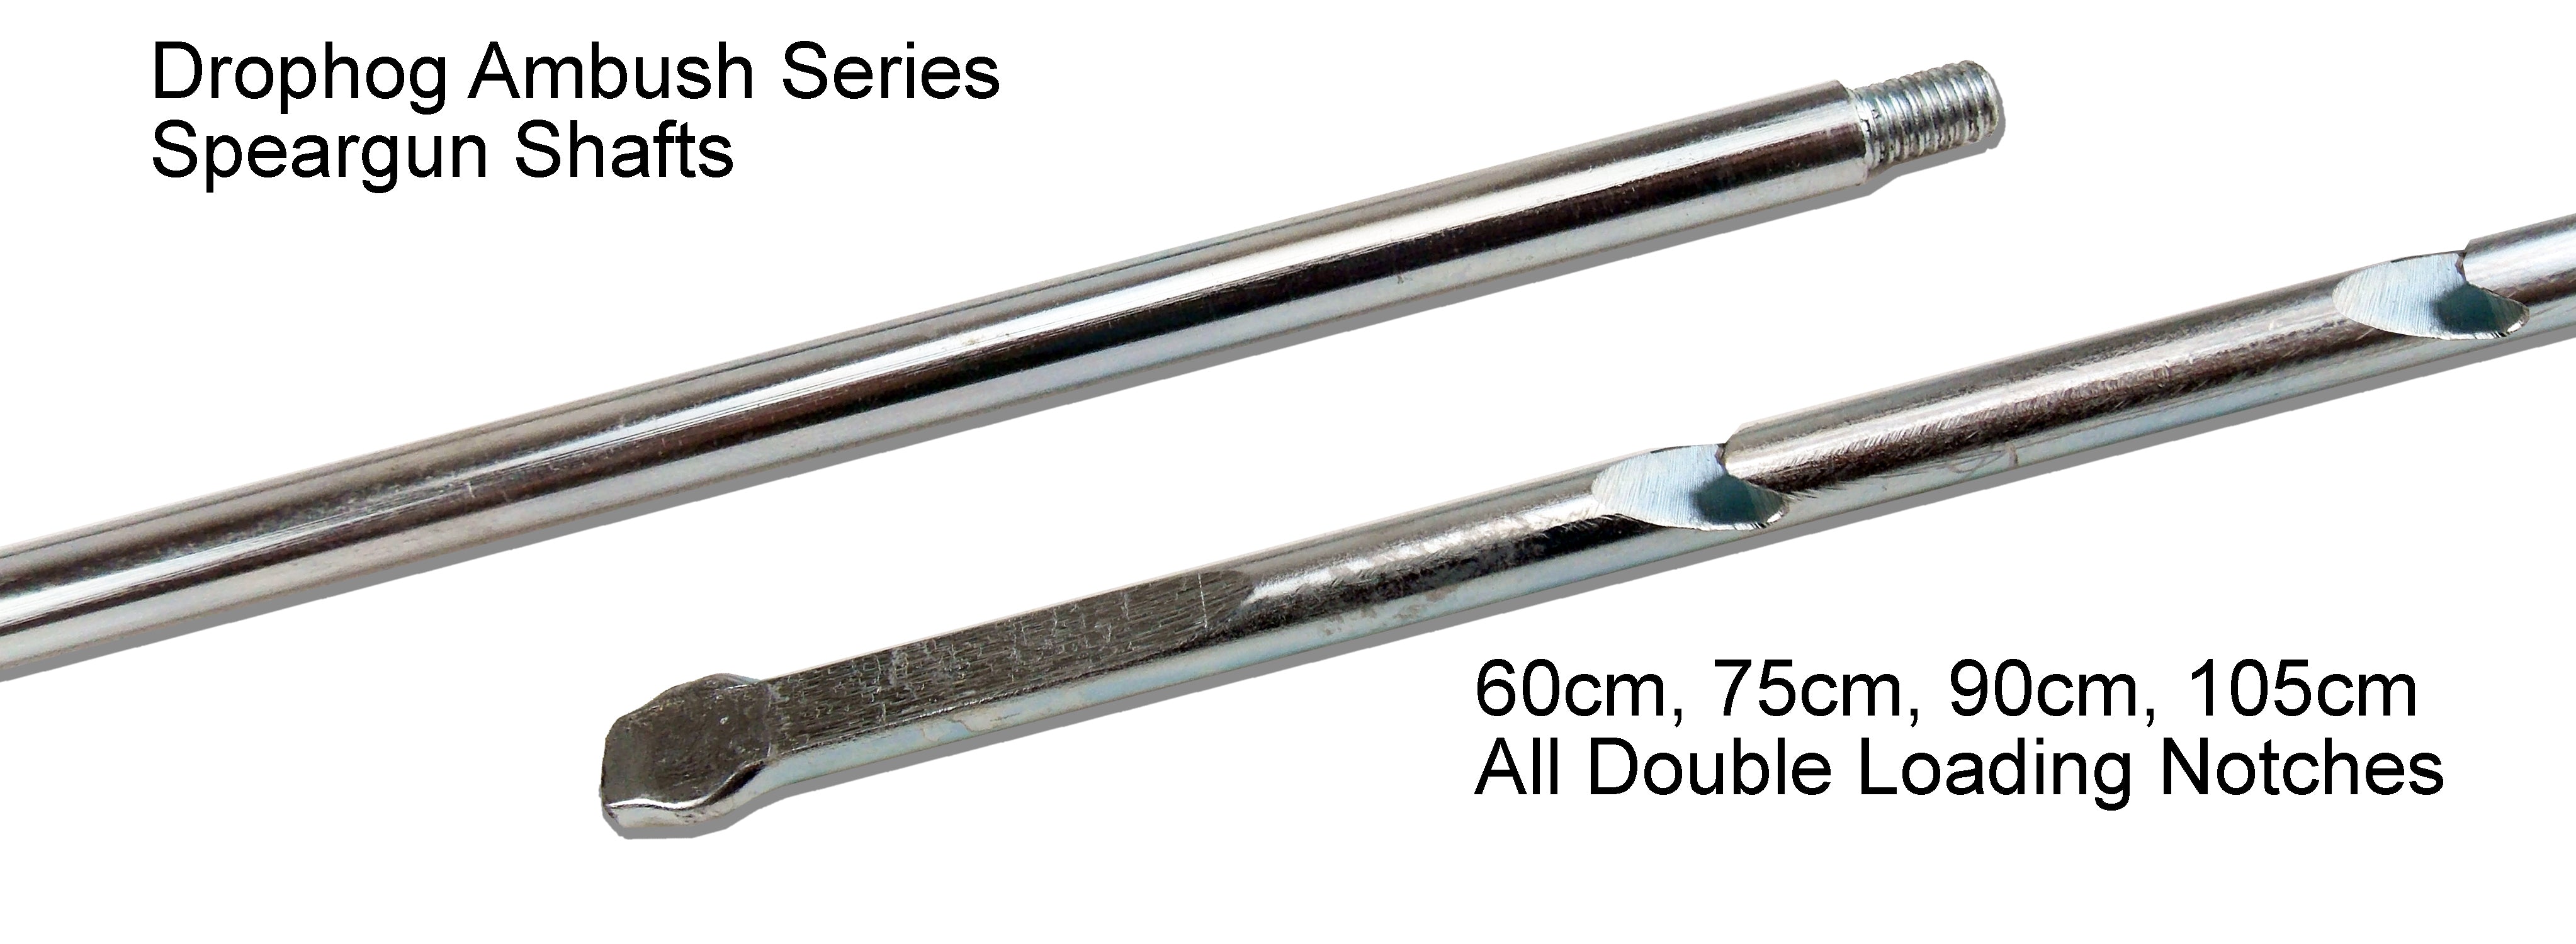 Drophog Ambush Speargun Shafts - Polished Galvanized Steel - 7mm